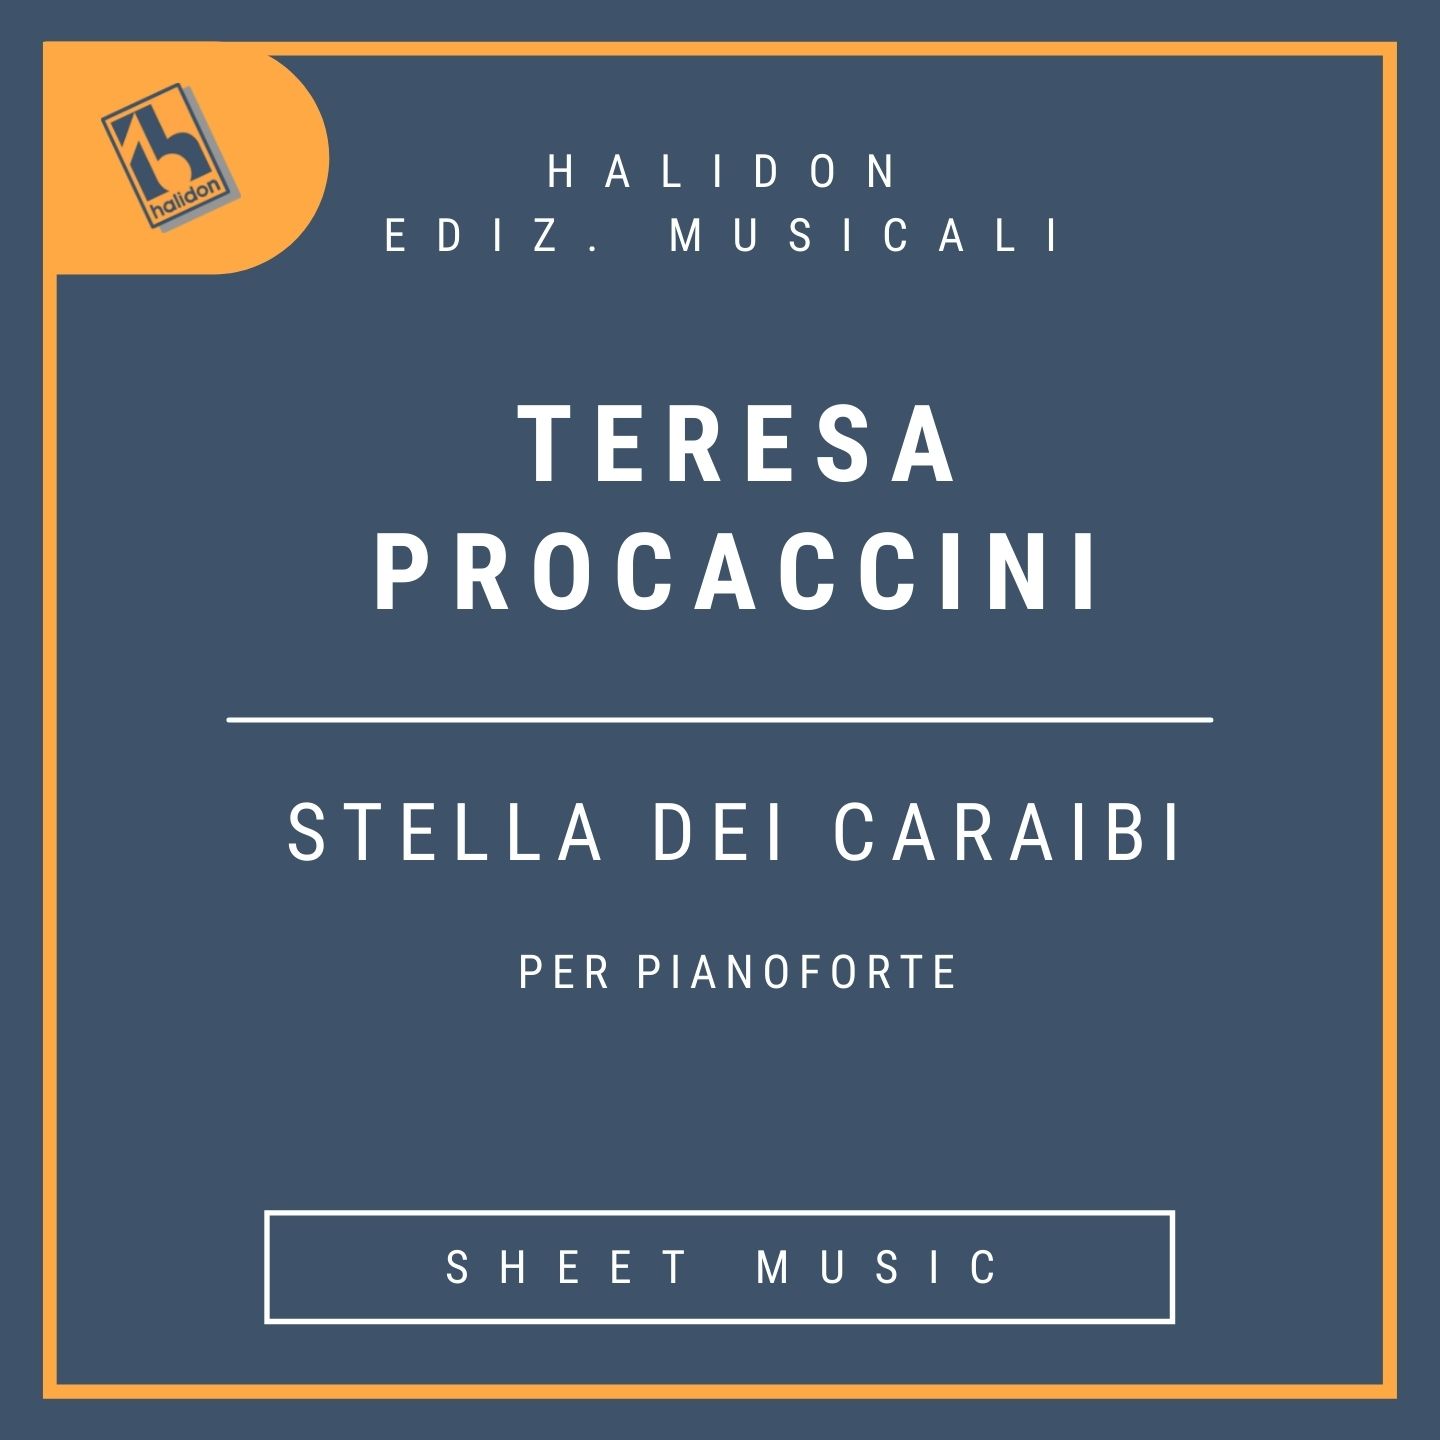 Teresa Procaccini - Stella dei Caraibi